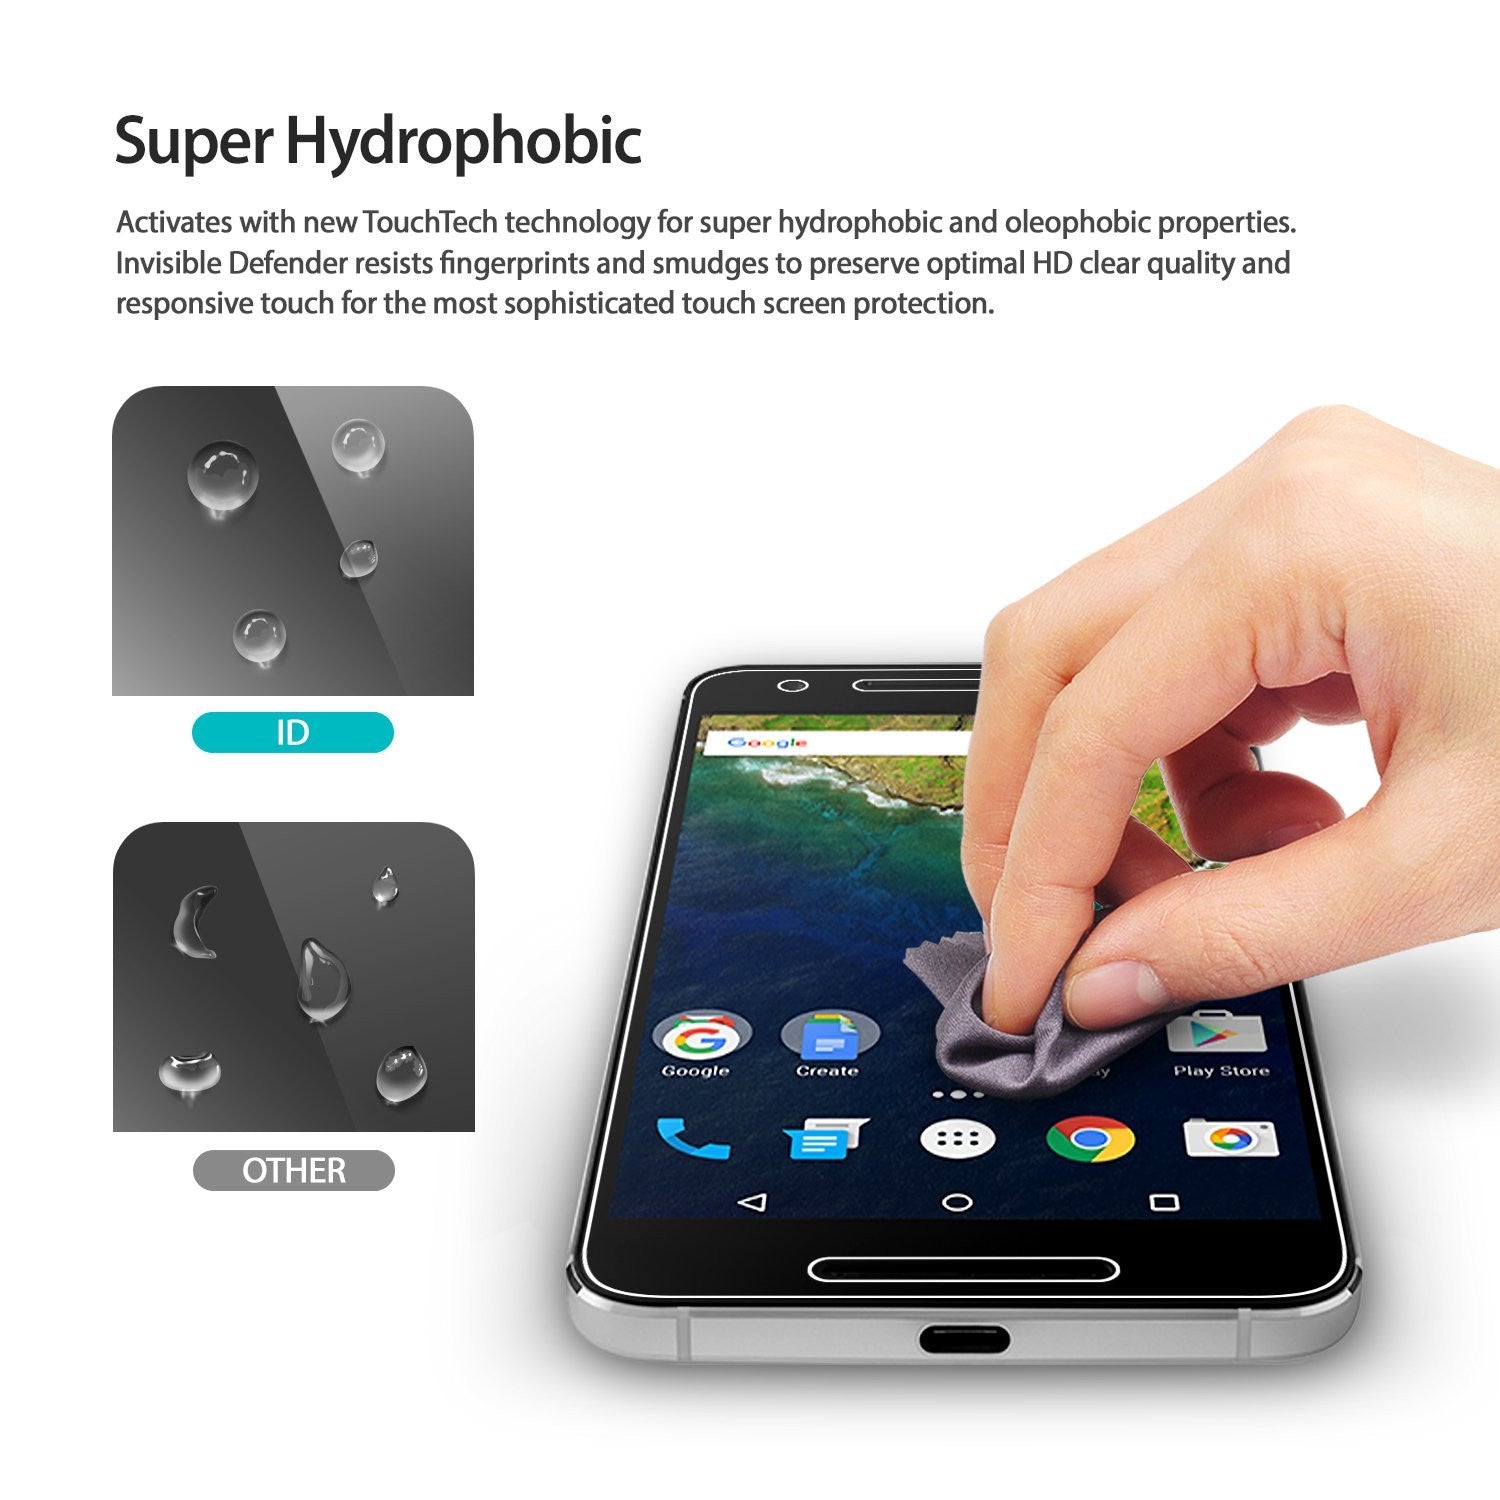 ringke invisible defender film screen protector for google nexus 6p main super hydrophobic